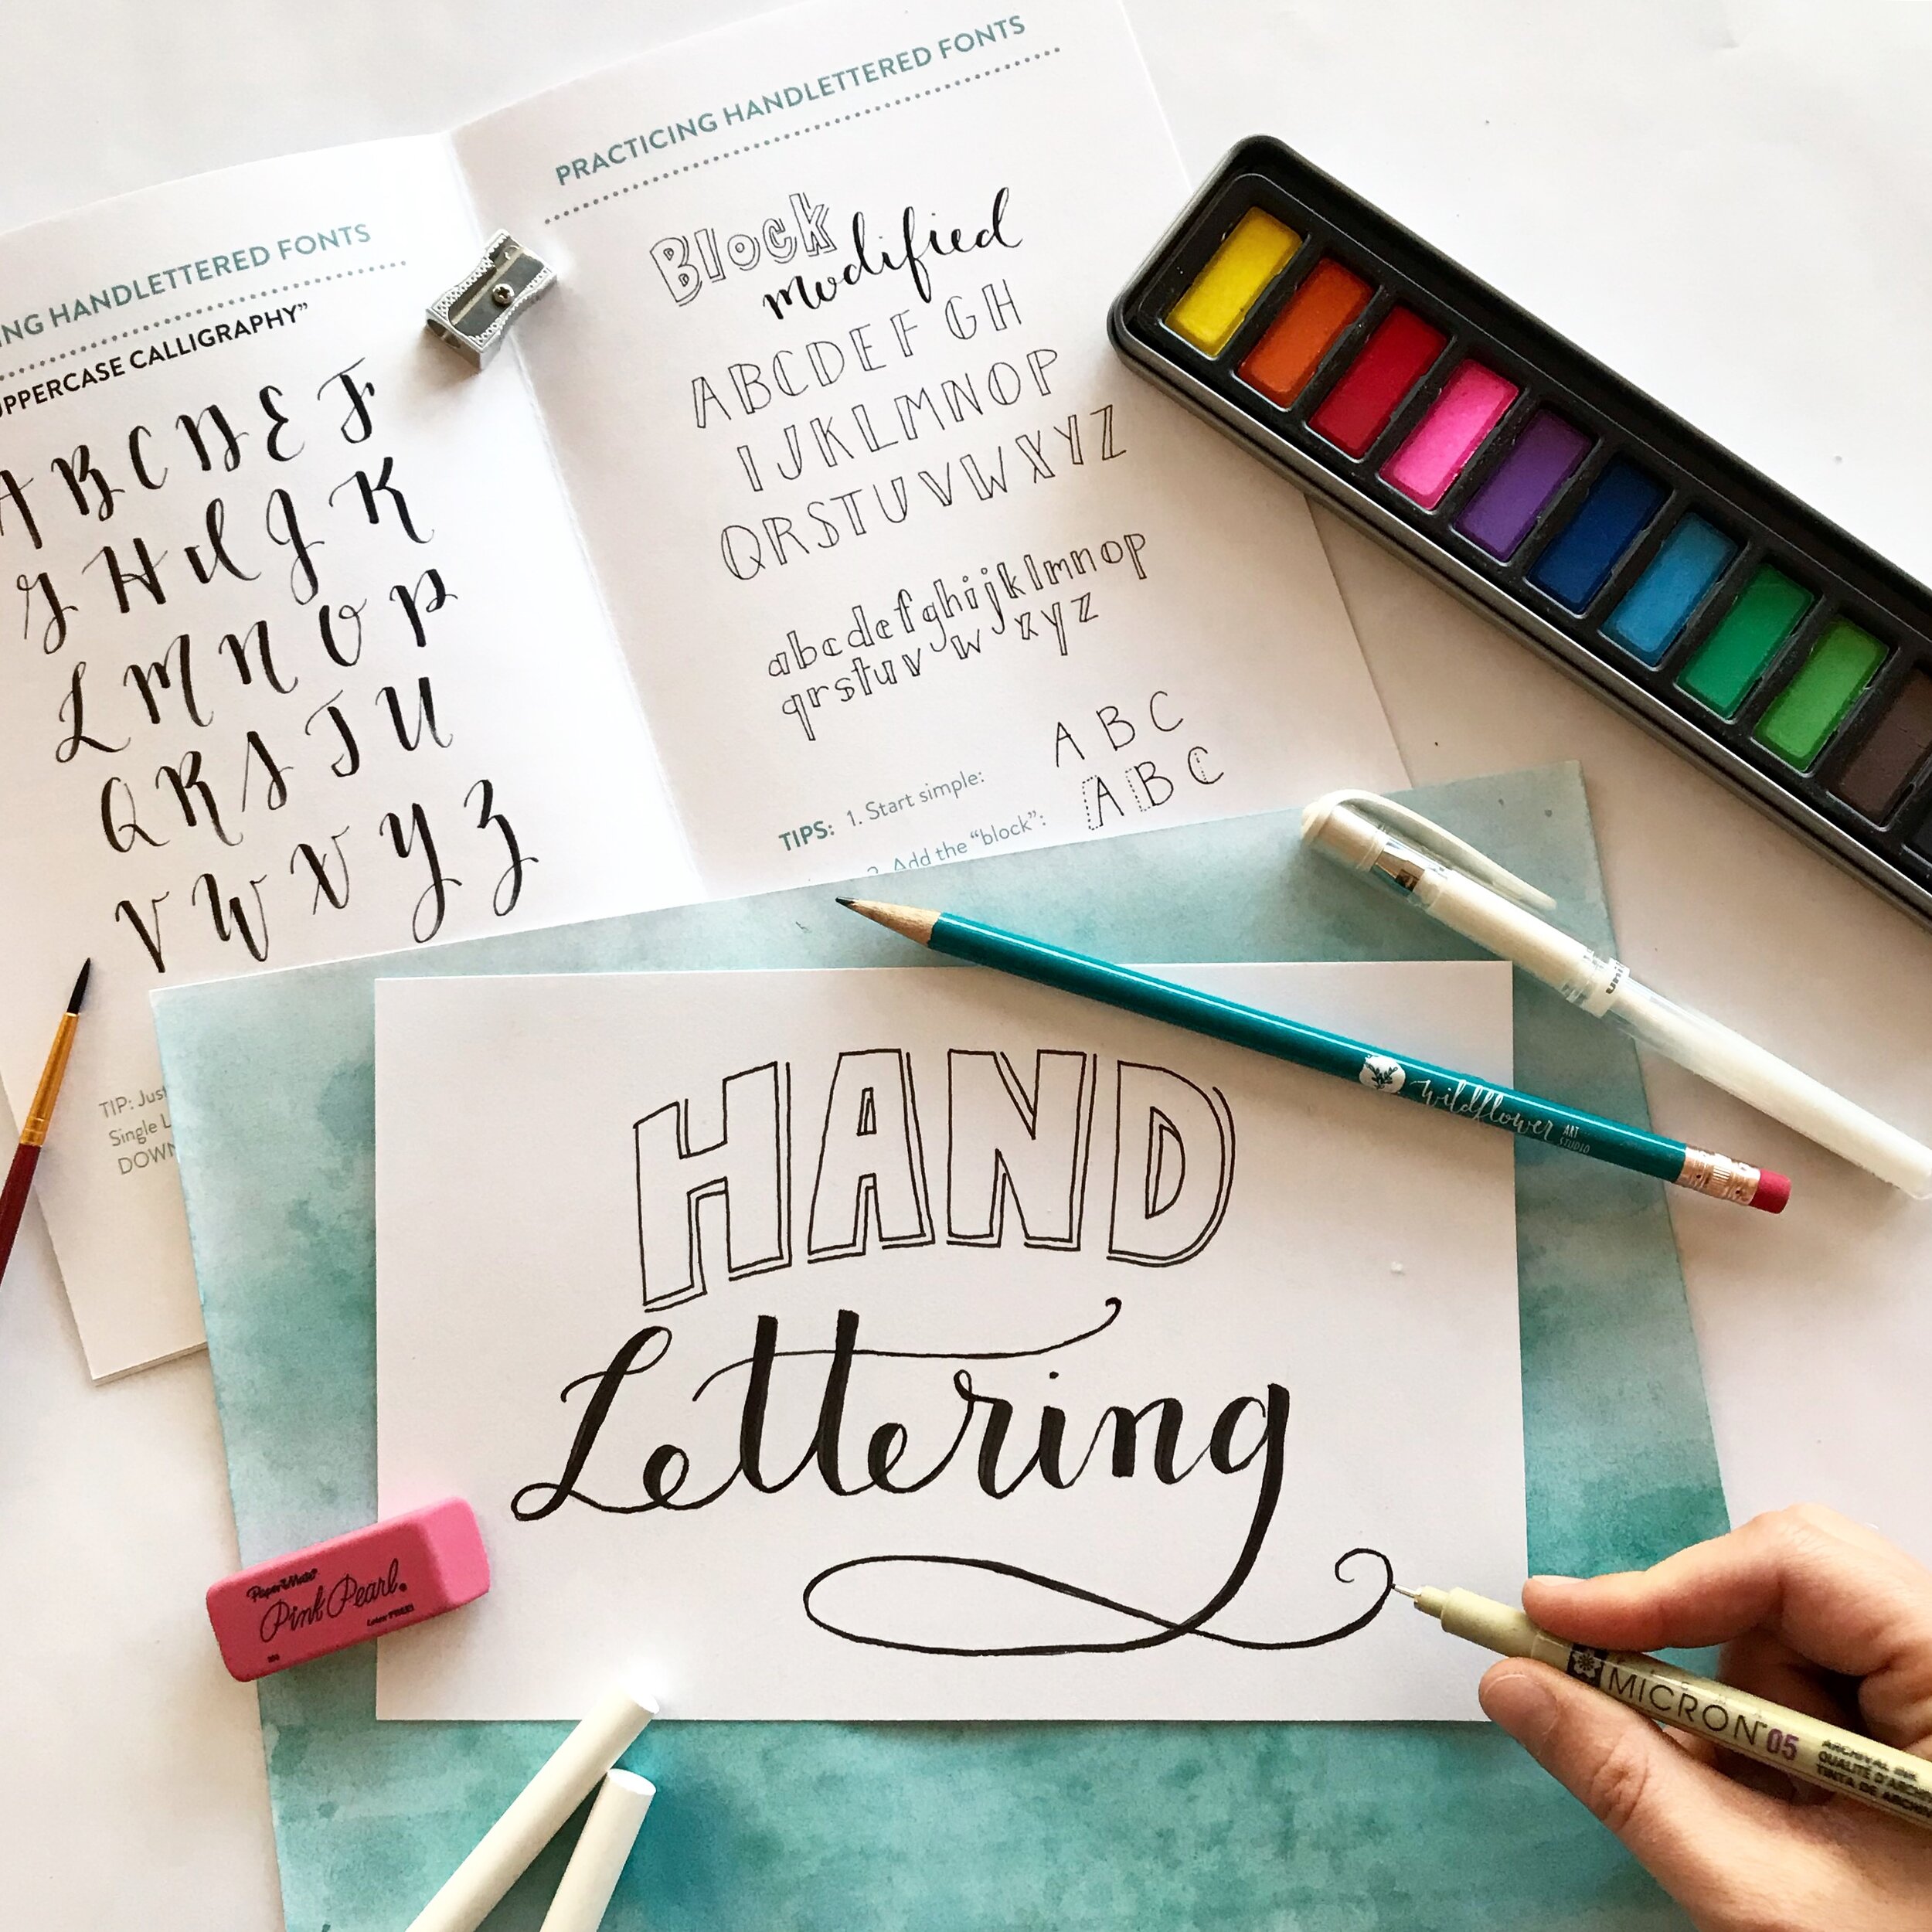 Online Workshop + Hand Lettering Kit • BUNDLE — Wildflower Art Studio